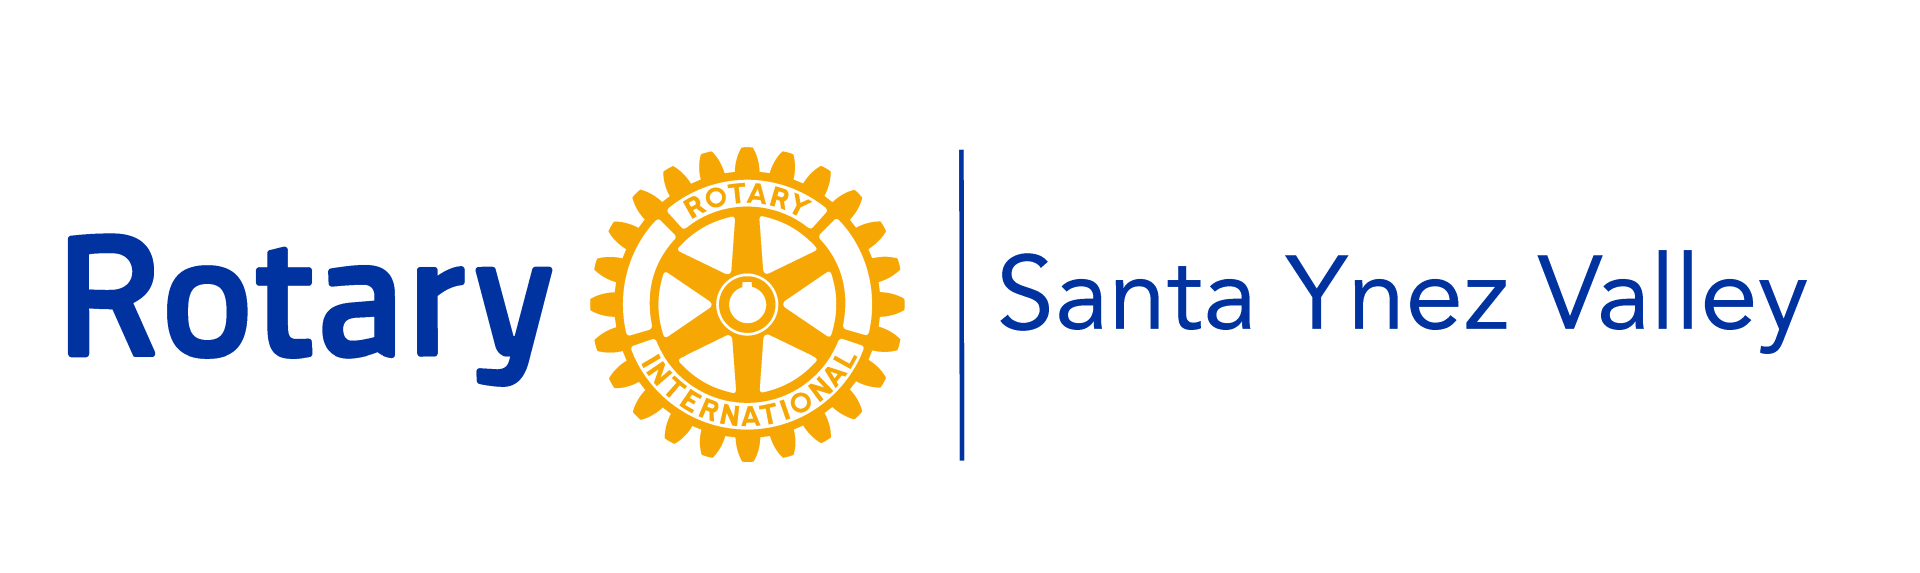 Rotary Club of the Santa Ynez Valley